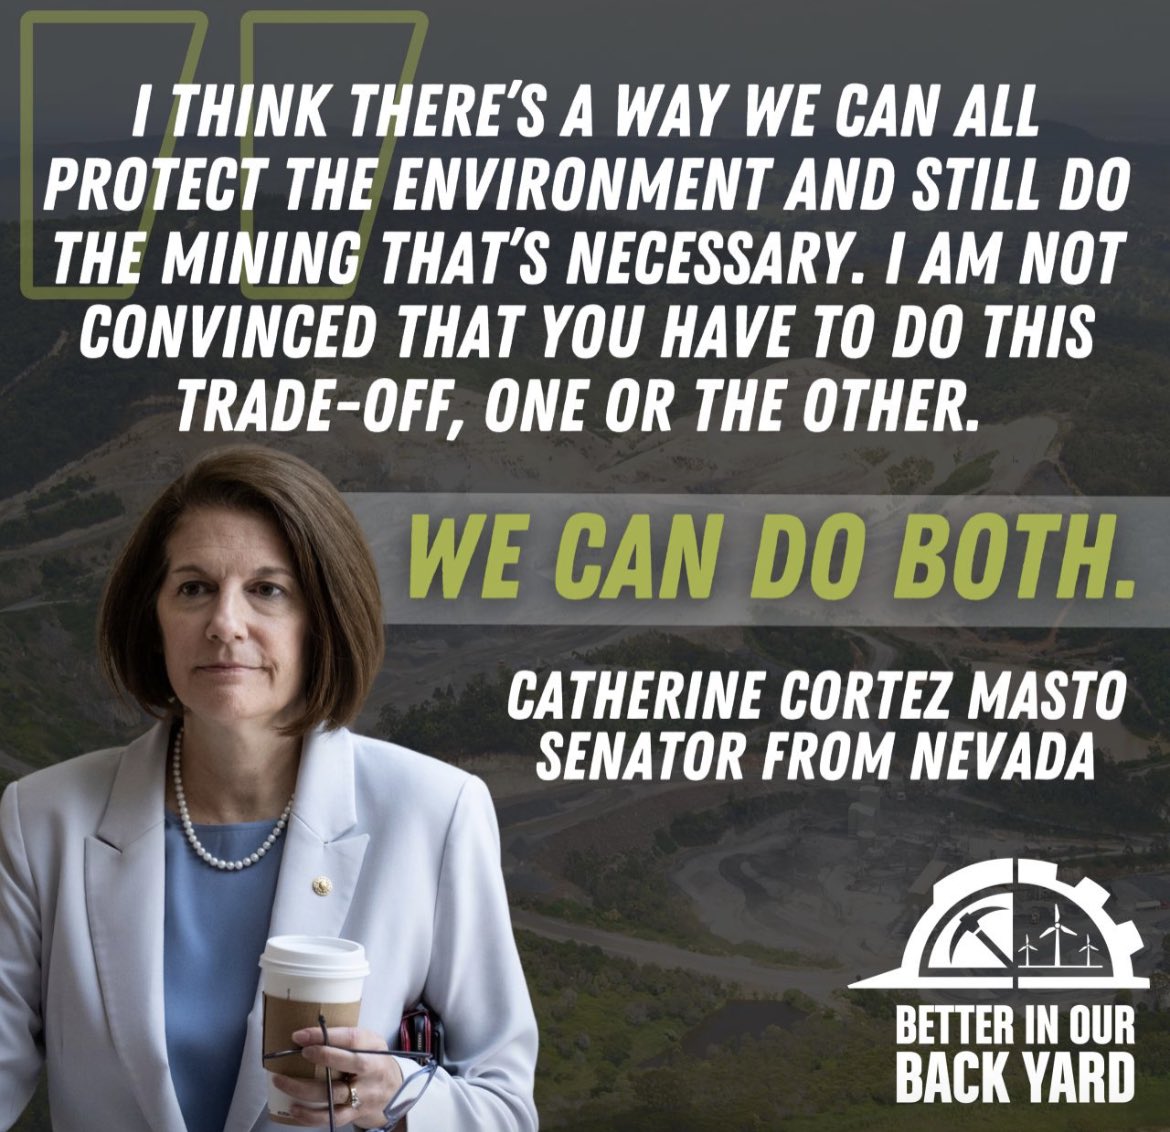 Thank you @SenCortezMasto @CortezMasto 

Some environmentalists are being ridiculous….

#mining #Commodities #supercycle